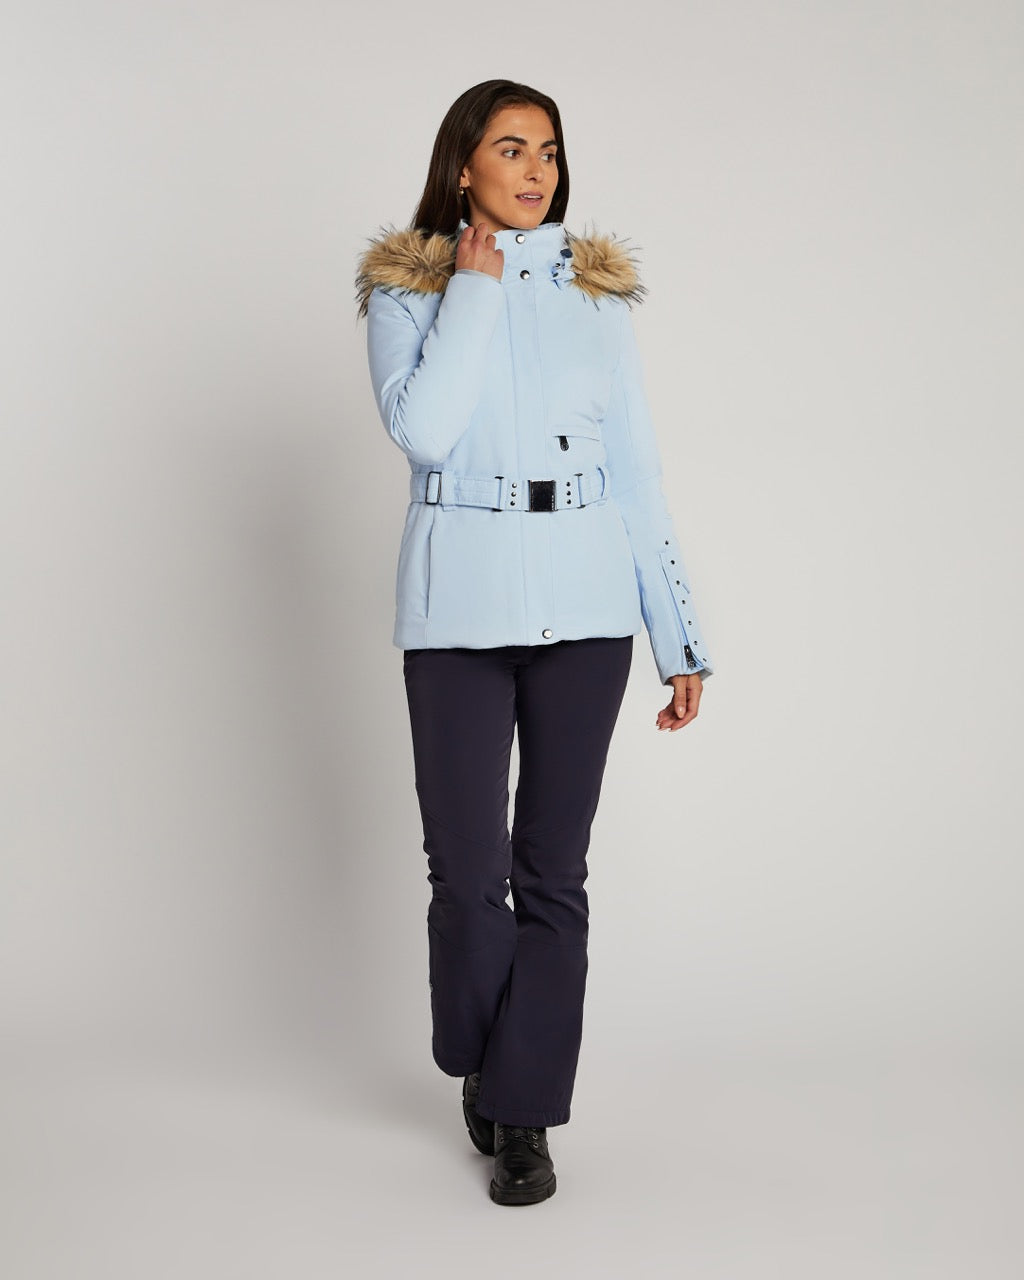 Poivre Blanc Women's Stretch Ski Jacket in Whisper Blue